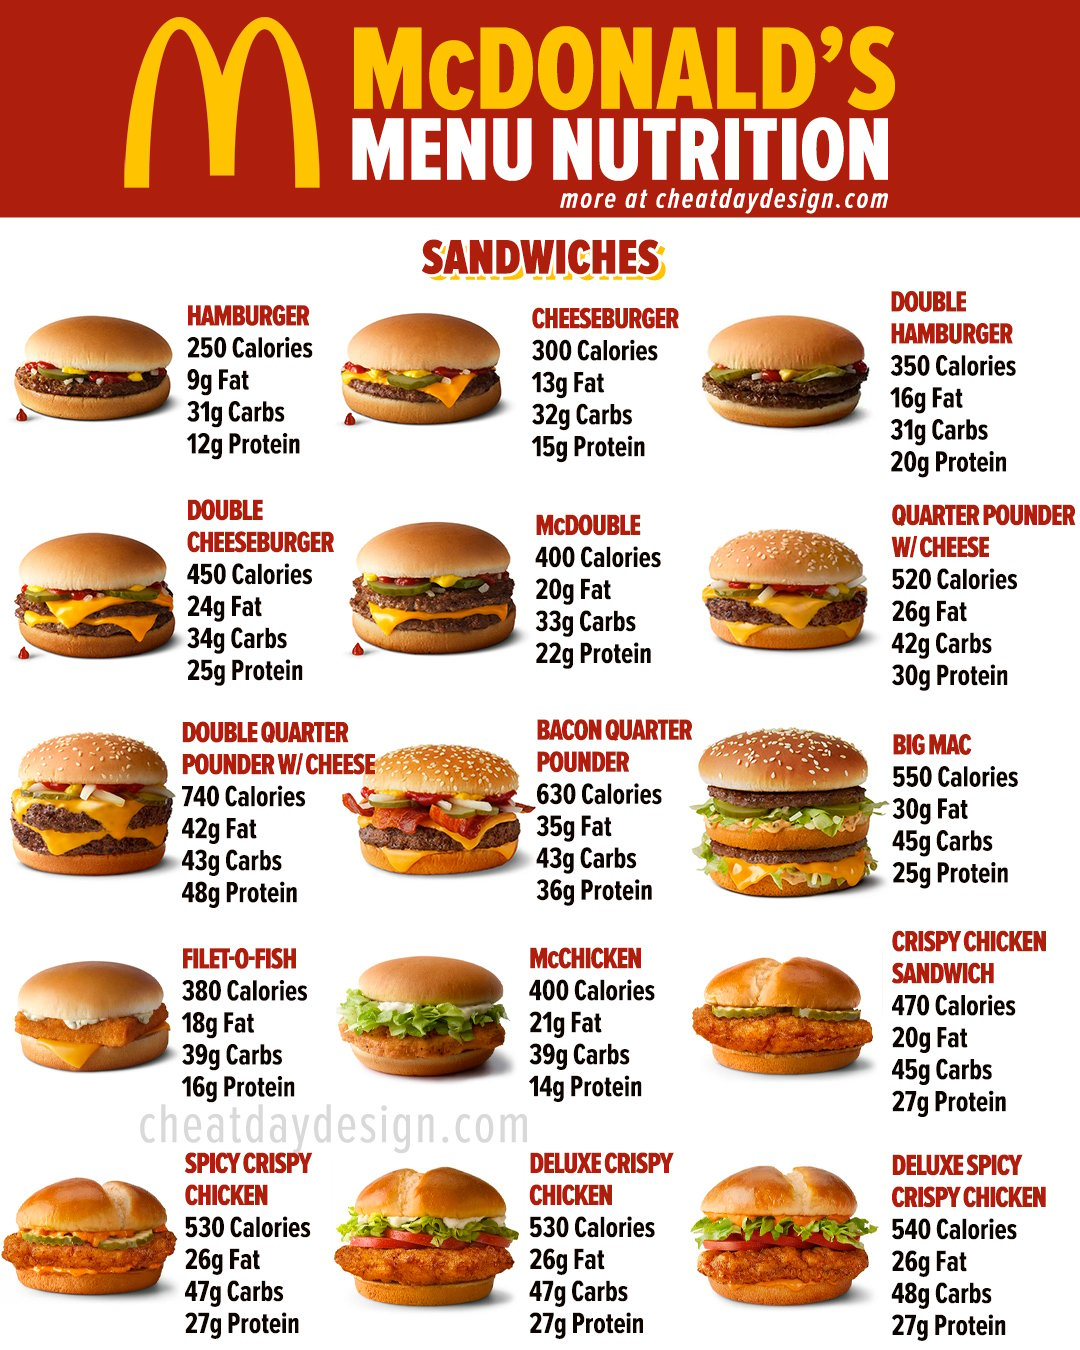 Mcdonalds-Sandwich-Menu-Nutrition.jpg